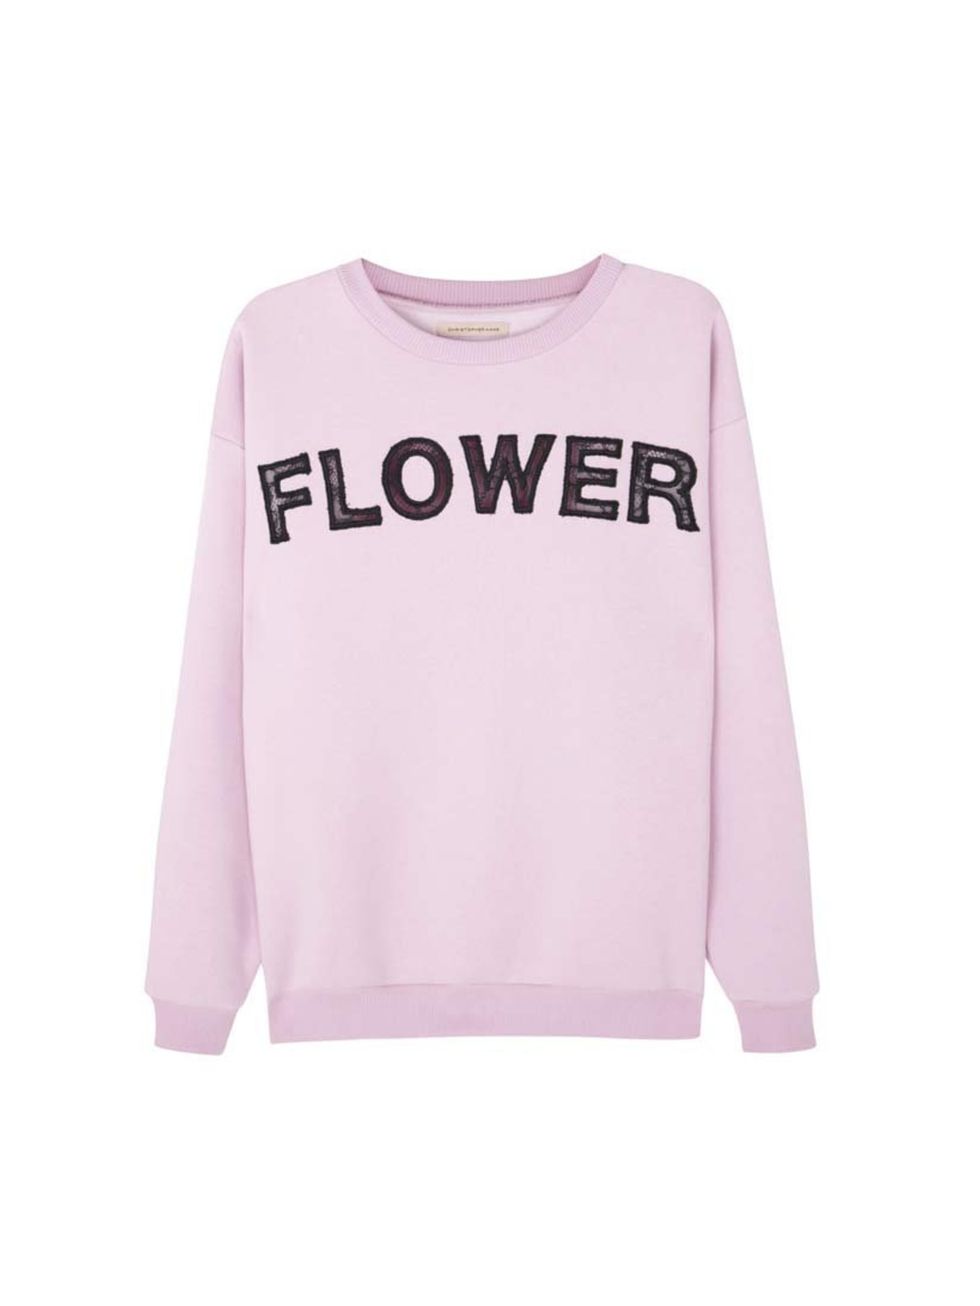 <p>Fashion Assistant Chloé Bloch chose...</p><p>Christopher Kane sweatshirt, was £330 now £165 at <a href="http://www.harveynichols.com/87092-lilac-embroidered-cotton-blend-sweatshirt/">Harvey Nichols</a> - sale starts 18th June</p>